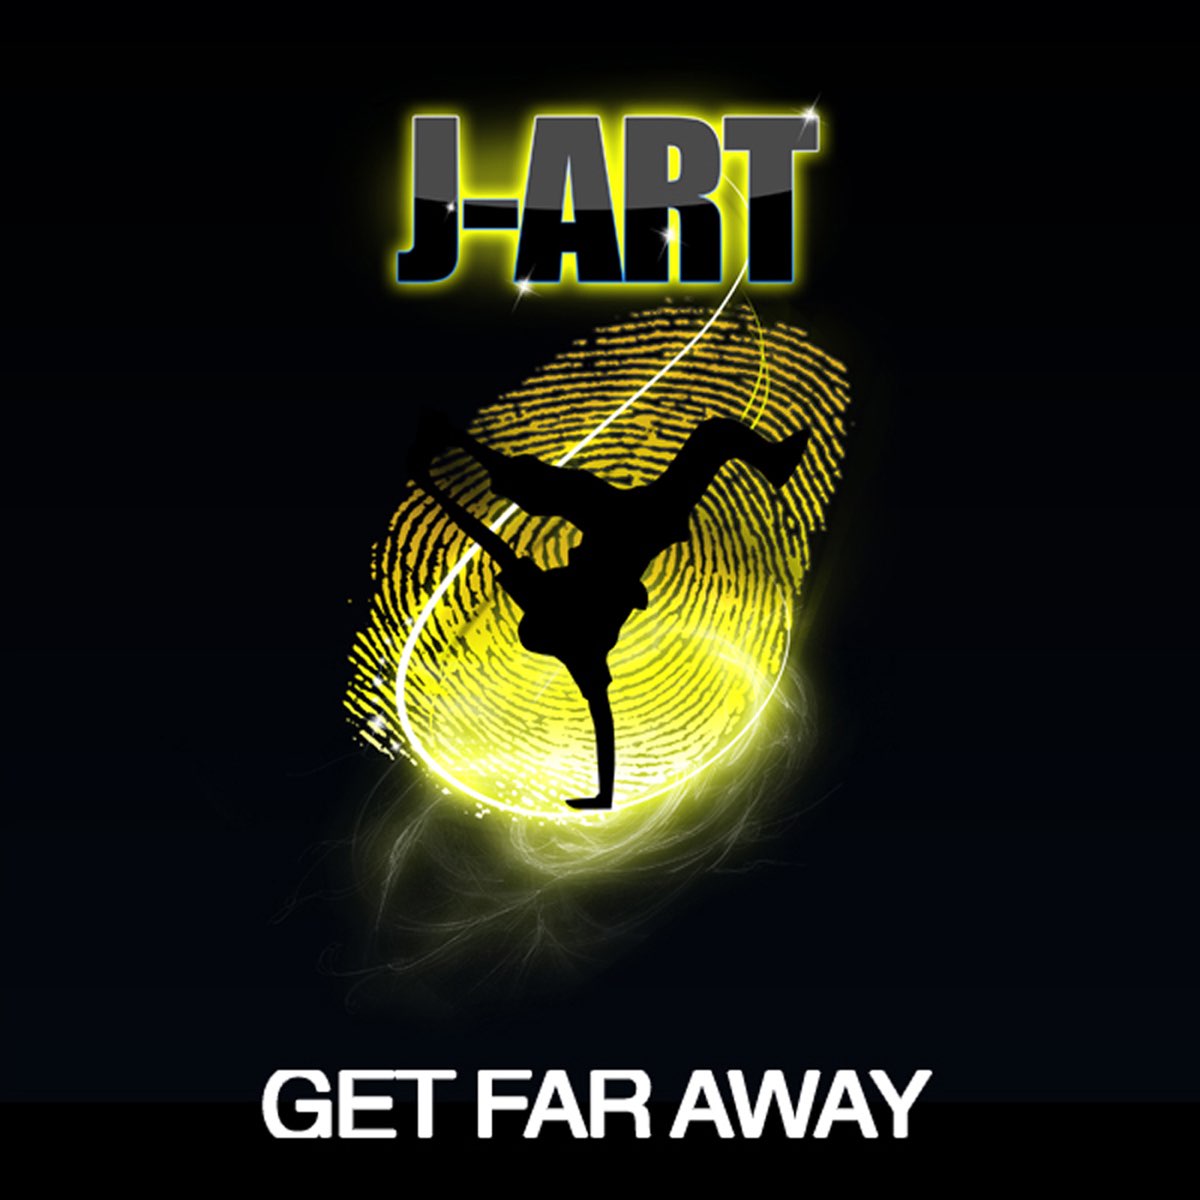 Get far away. Album Art get away get away. Album Art 3 Fly away (Radio record).